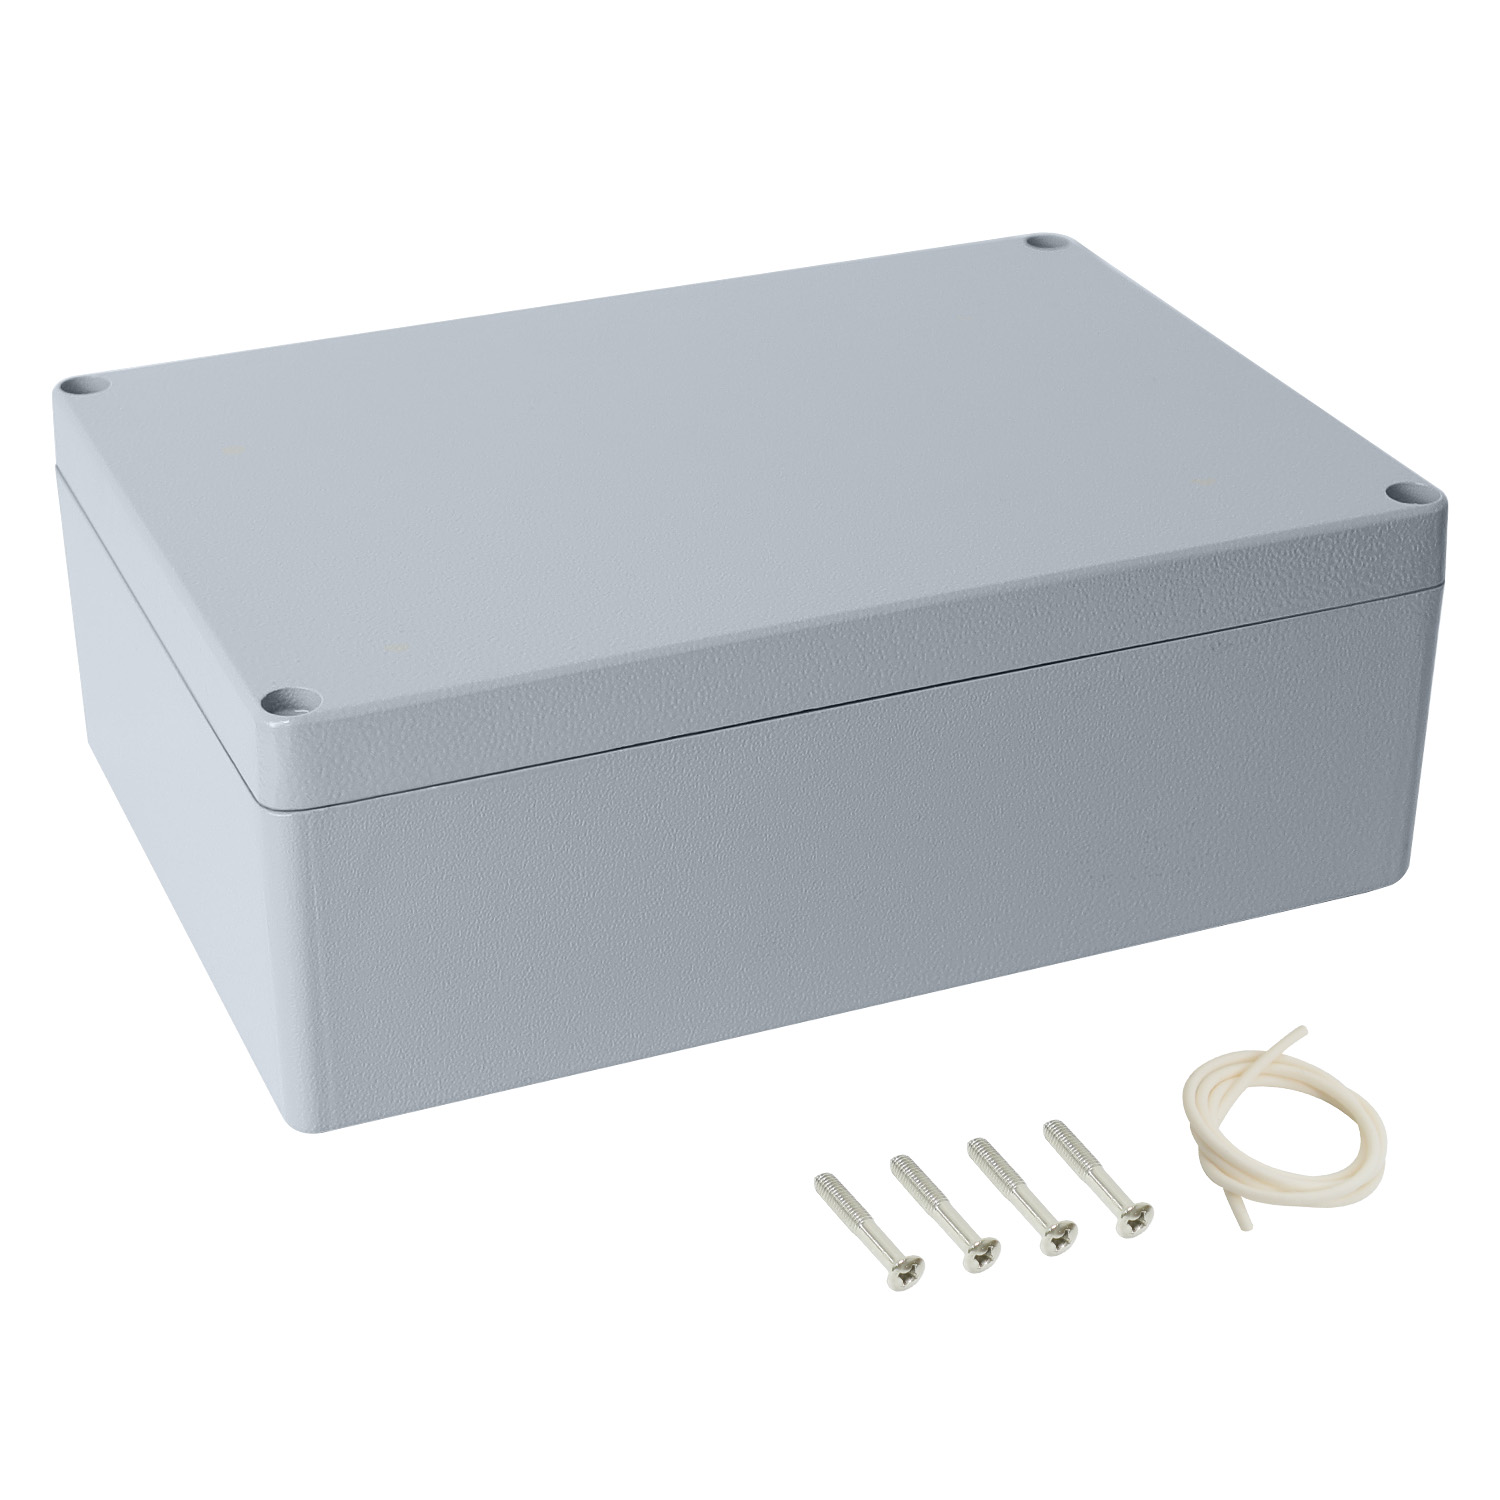 LeMotech Aluminum Alloy Metal Junction Box IP67 Waterproof